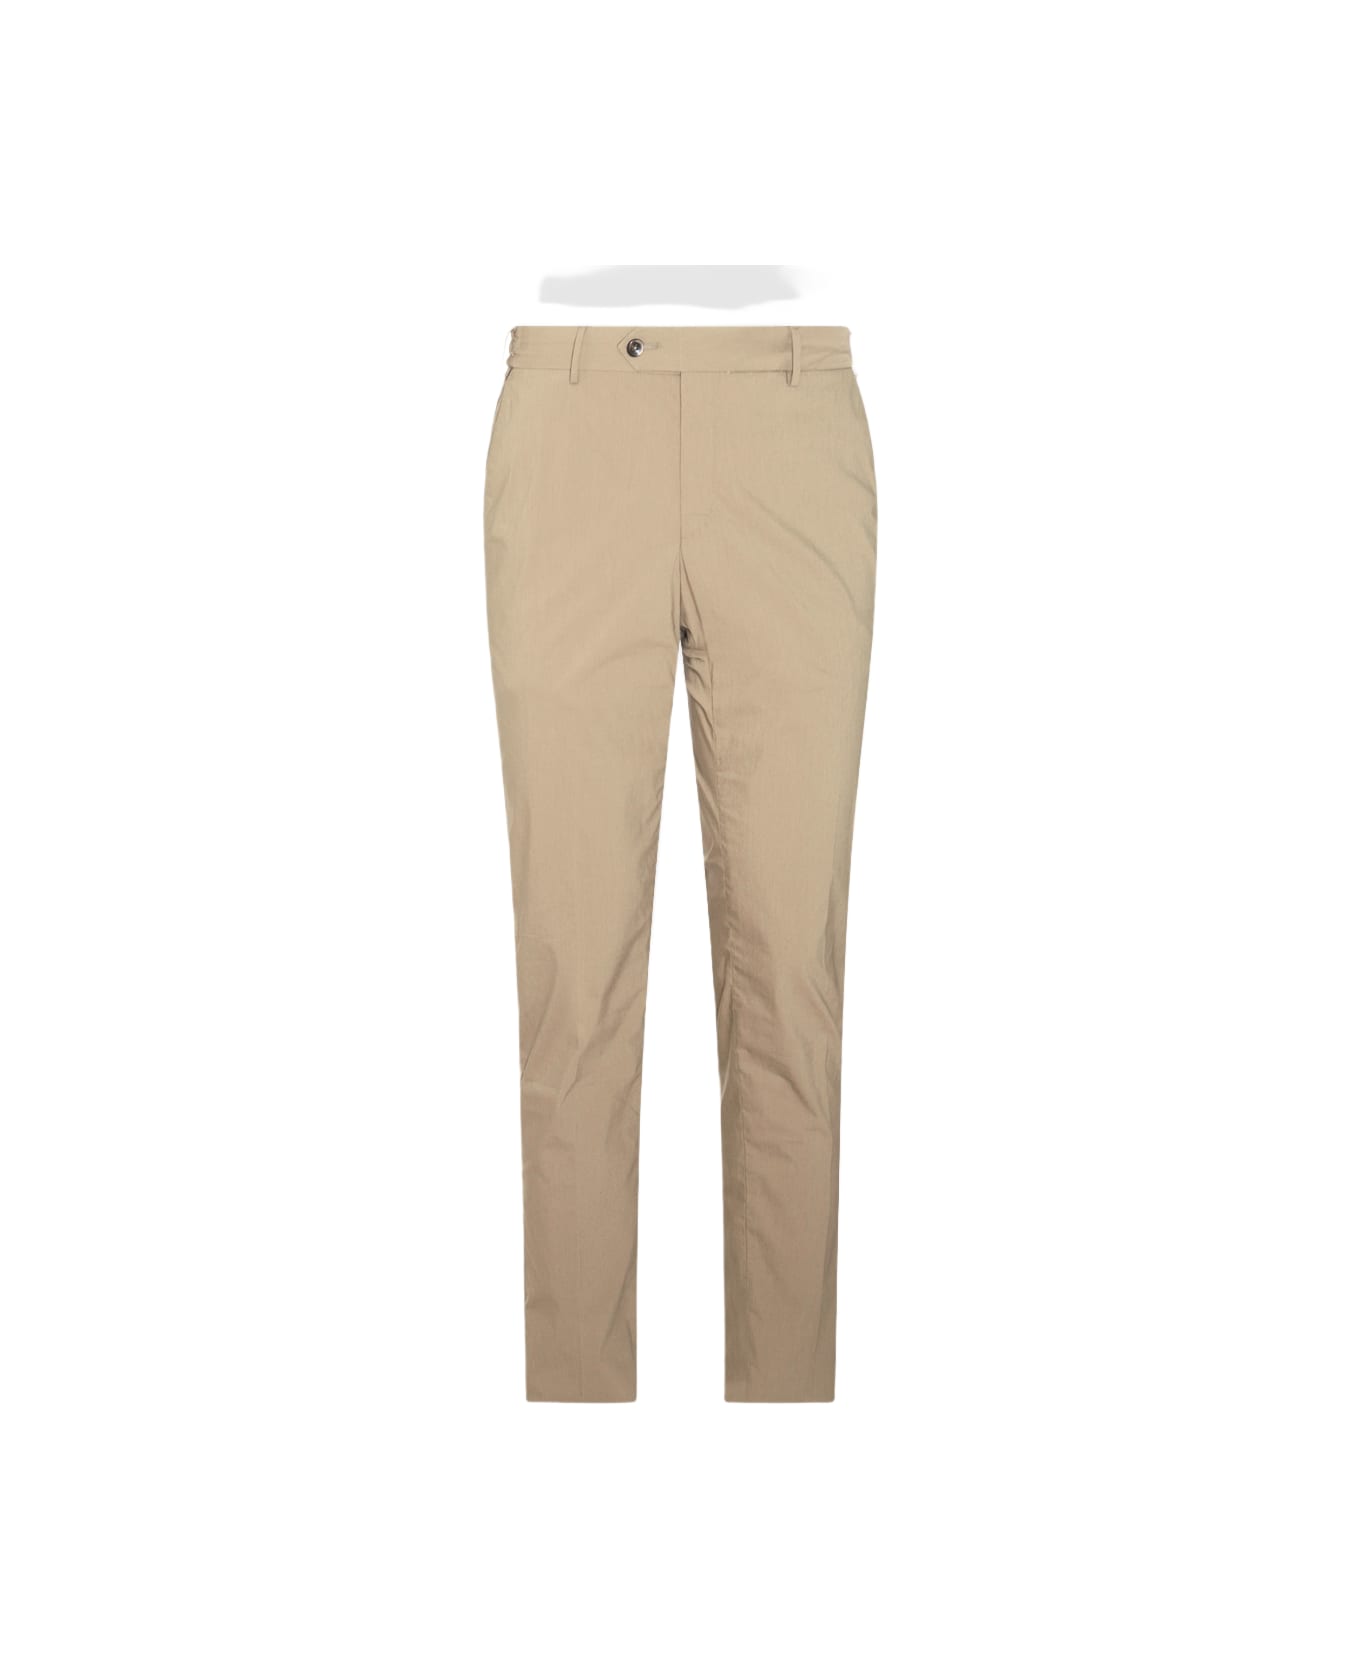 PT Torino Beige Cotton Pants - BEIGE FREDDO